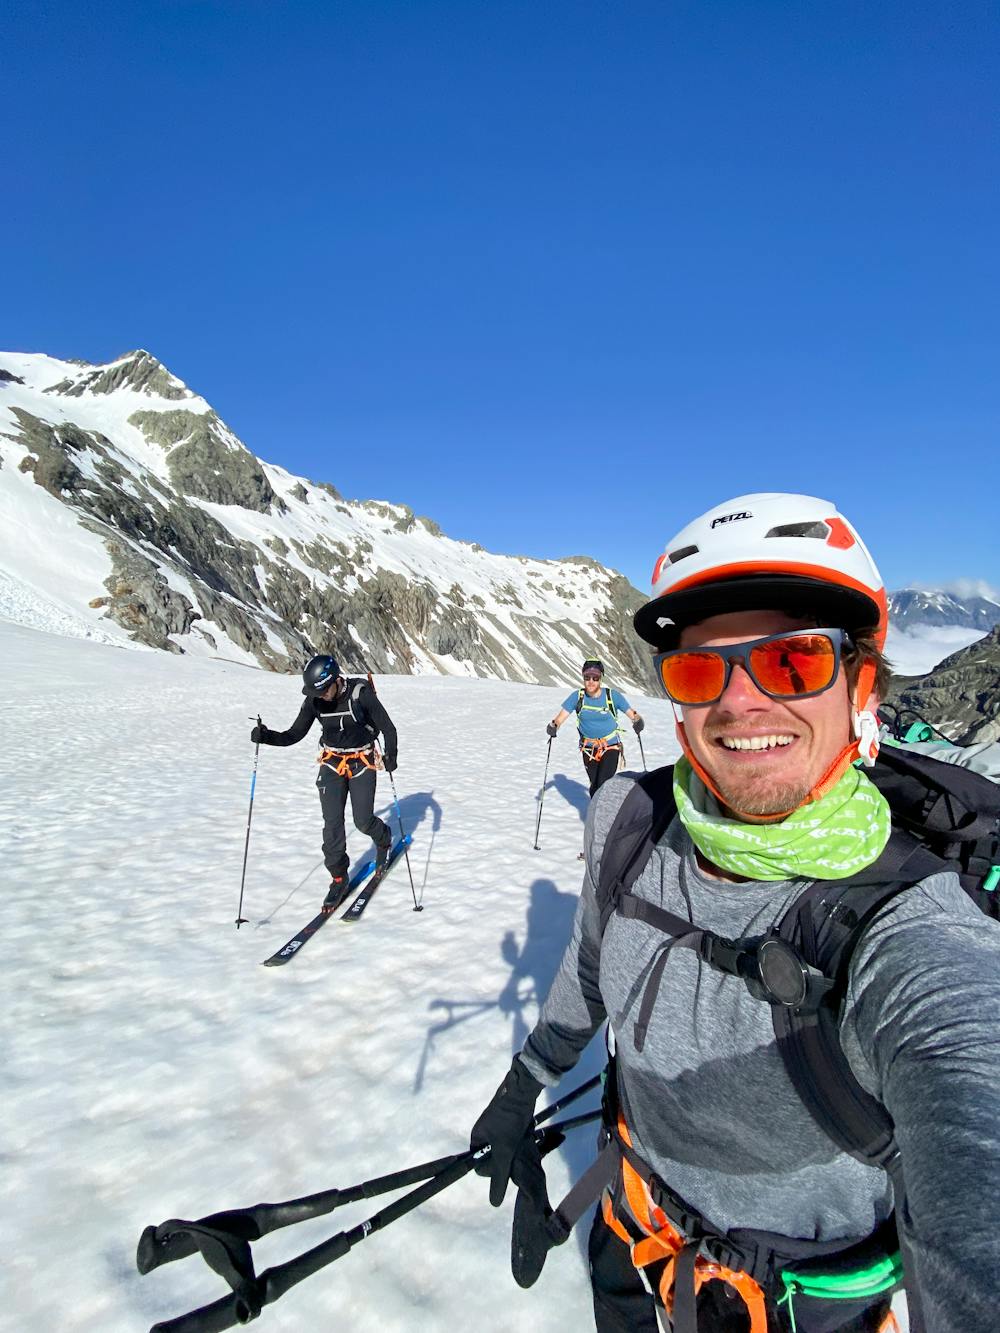 Team glacier skin selfie!